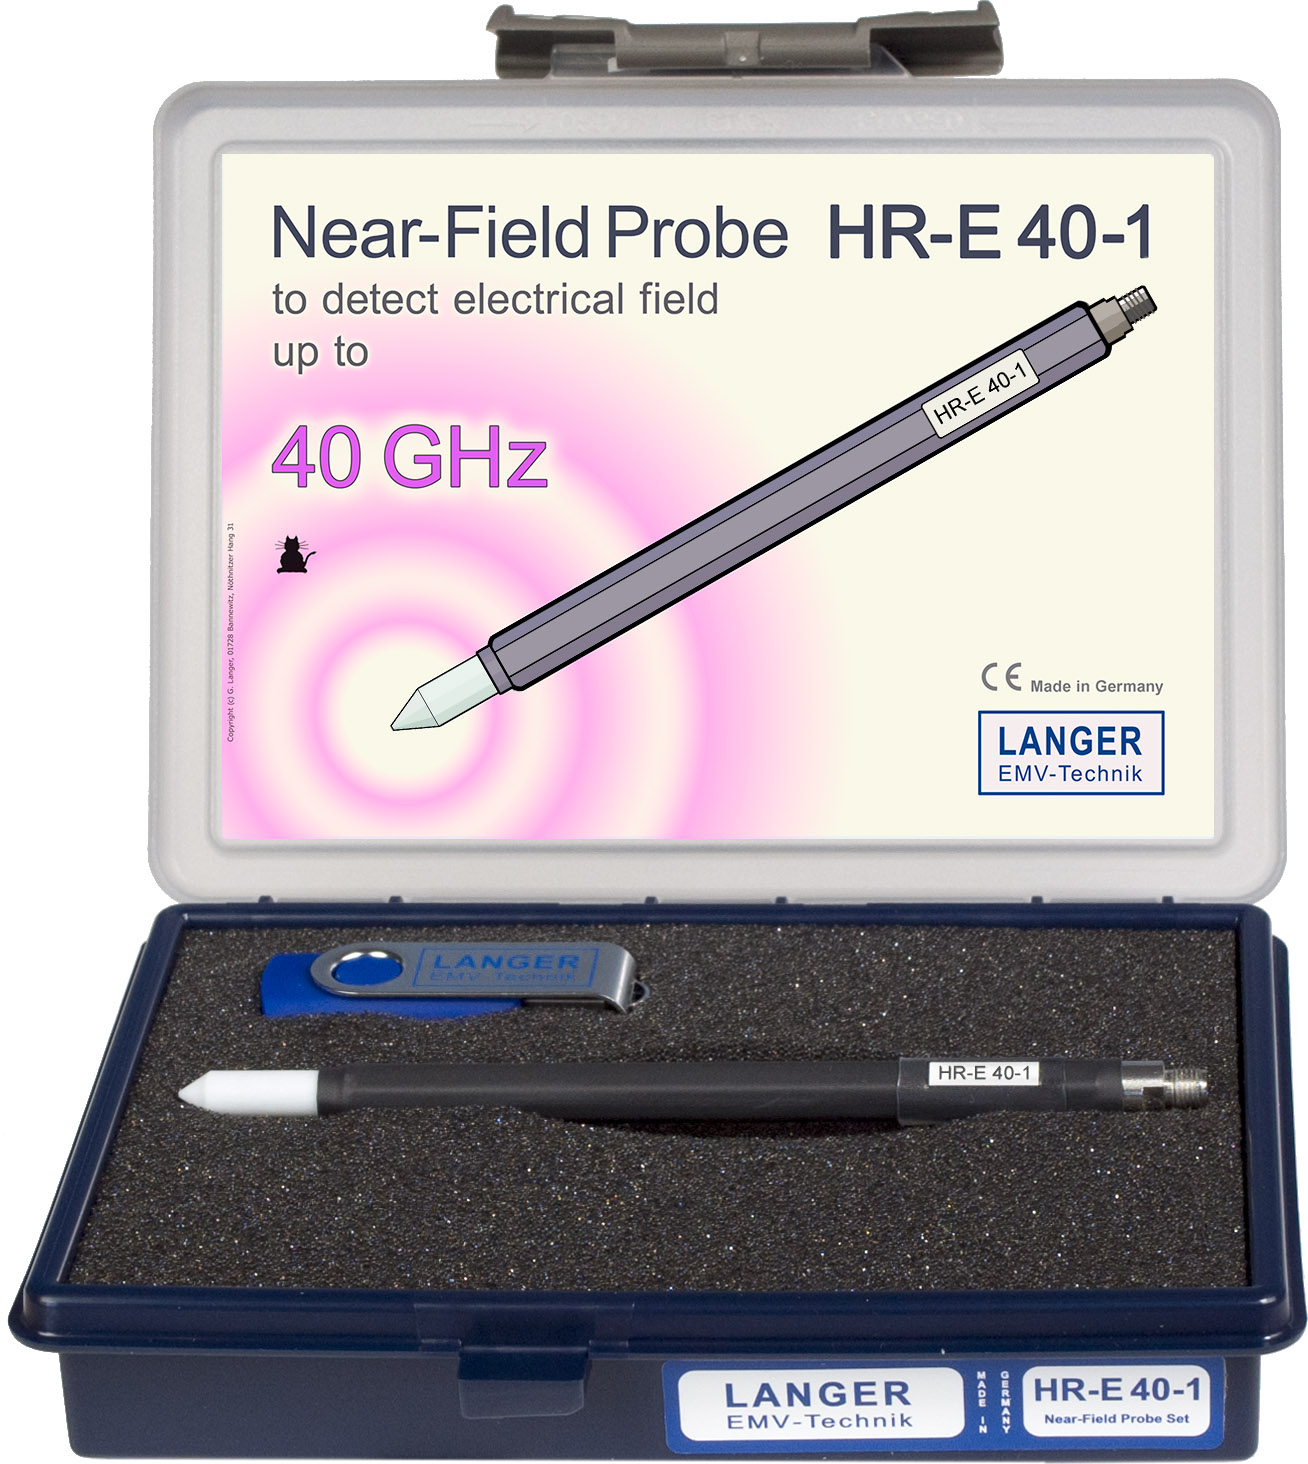 HR-E 40-1 set, Near-Field Probe Set up to 40 GHz E-field